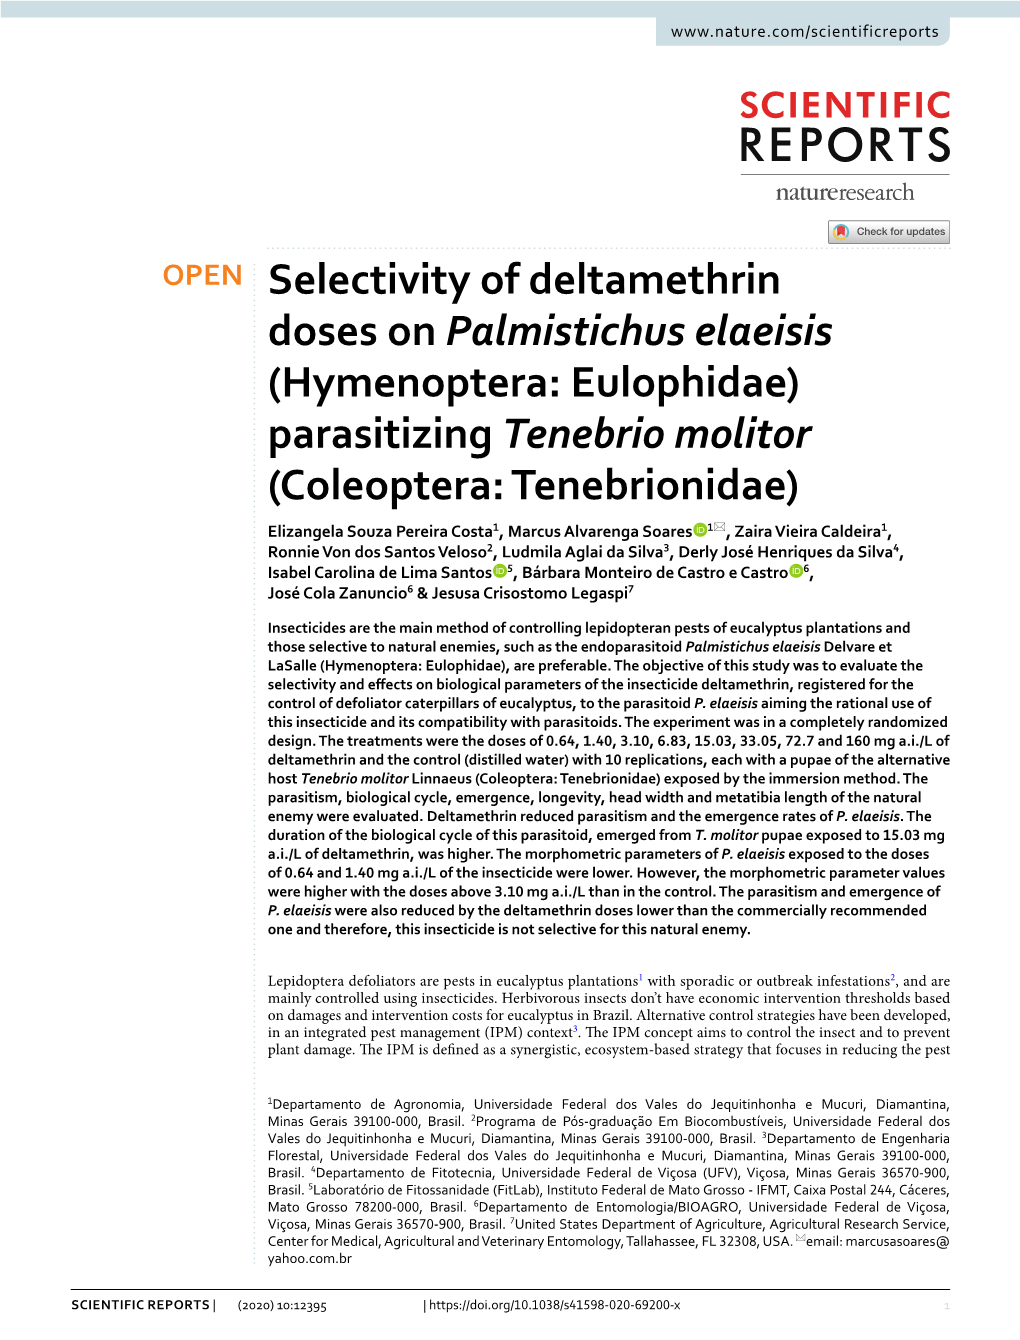 Selectivity of Deltamethrin Doses on Palmistichus Elaeisis